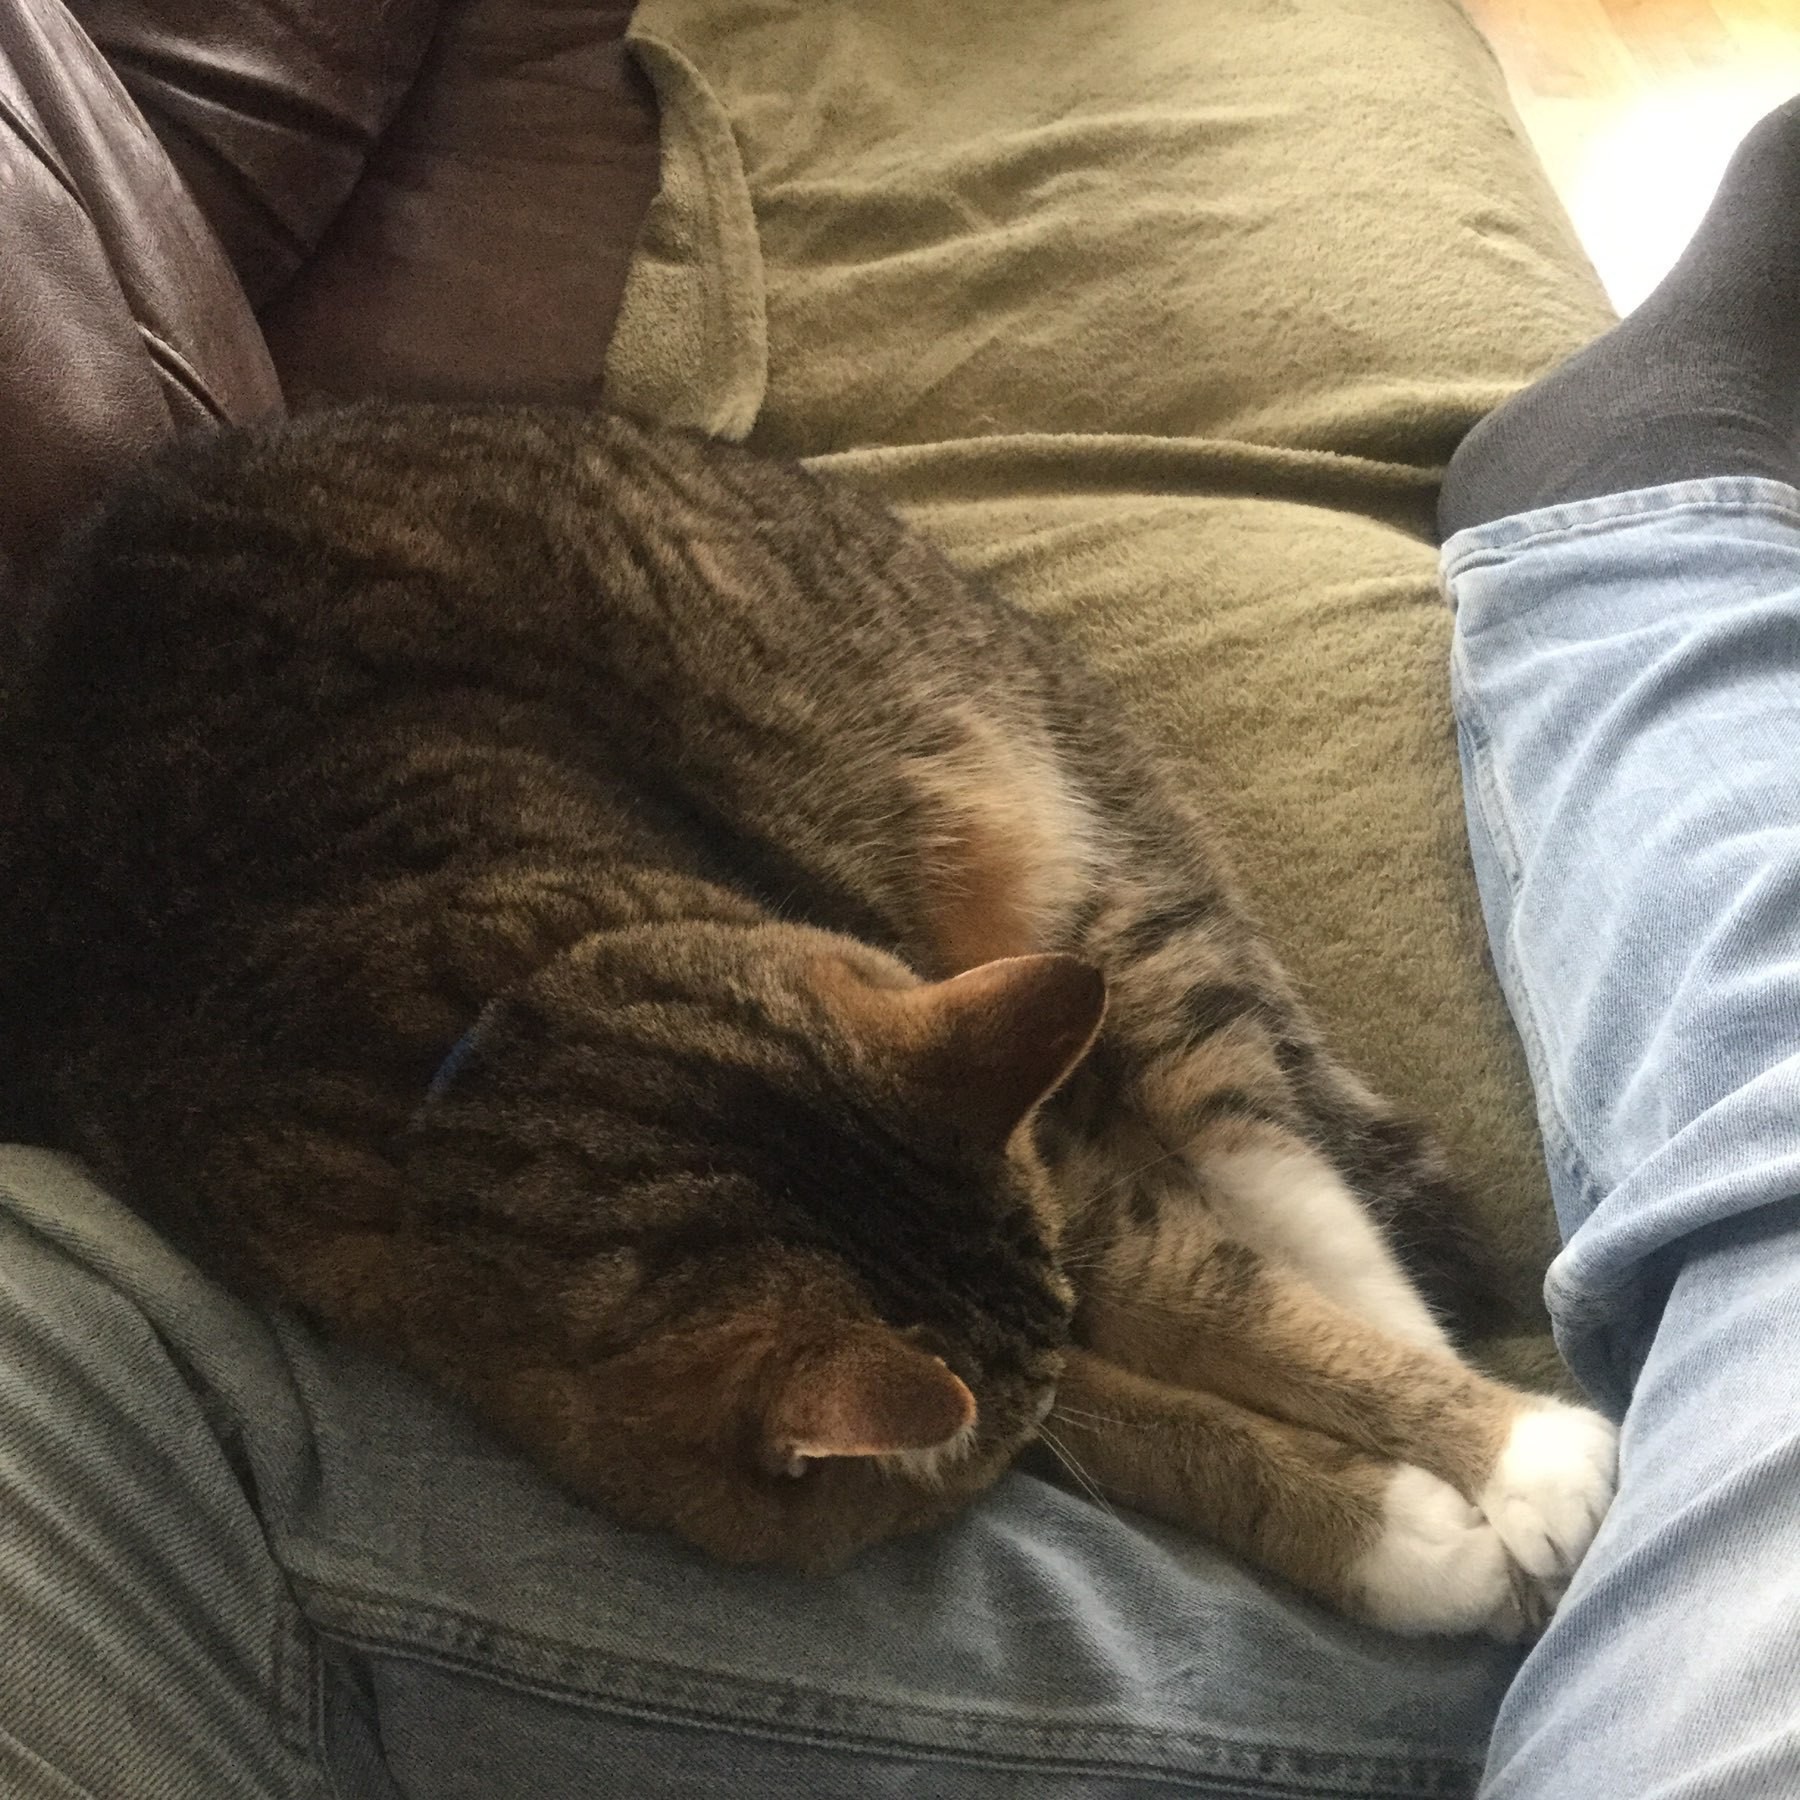 Cat snuggled up against my leg